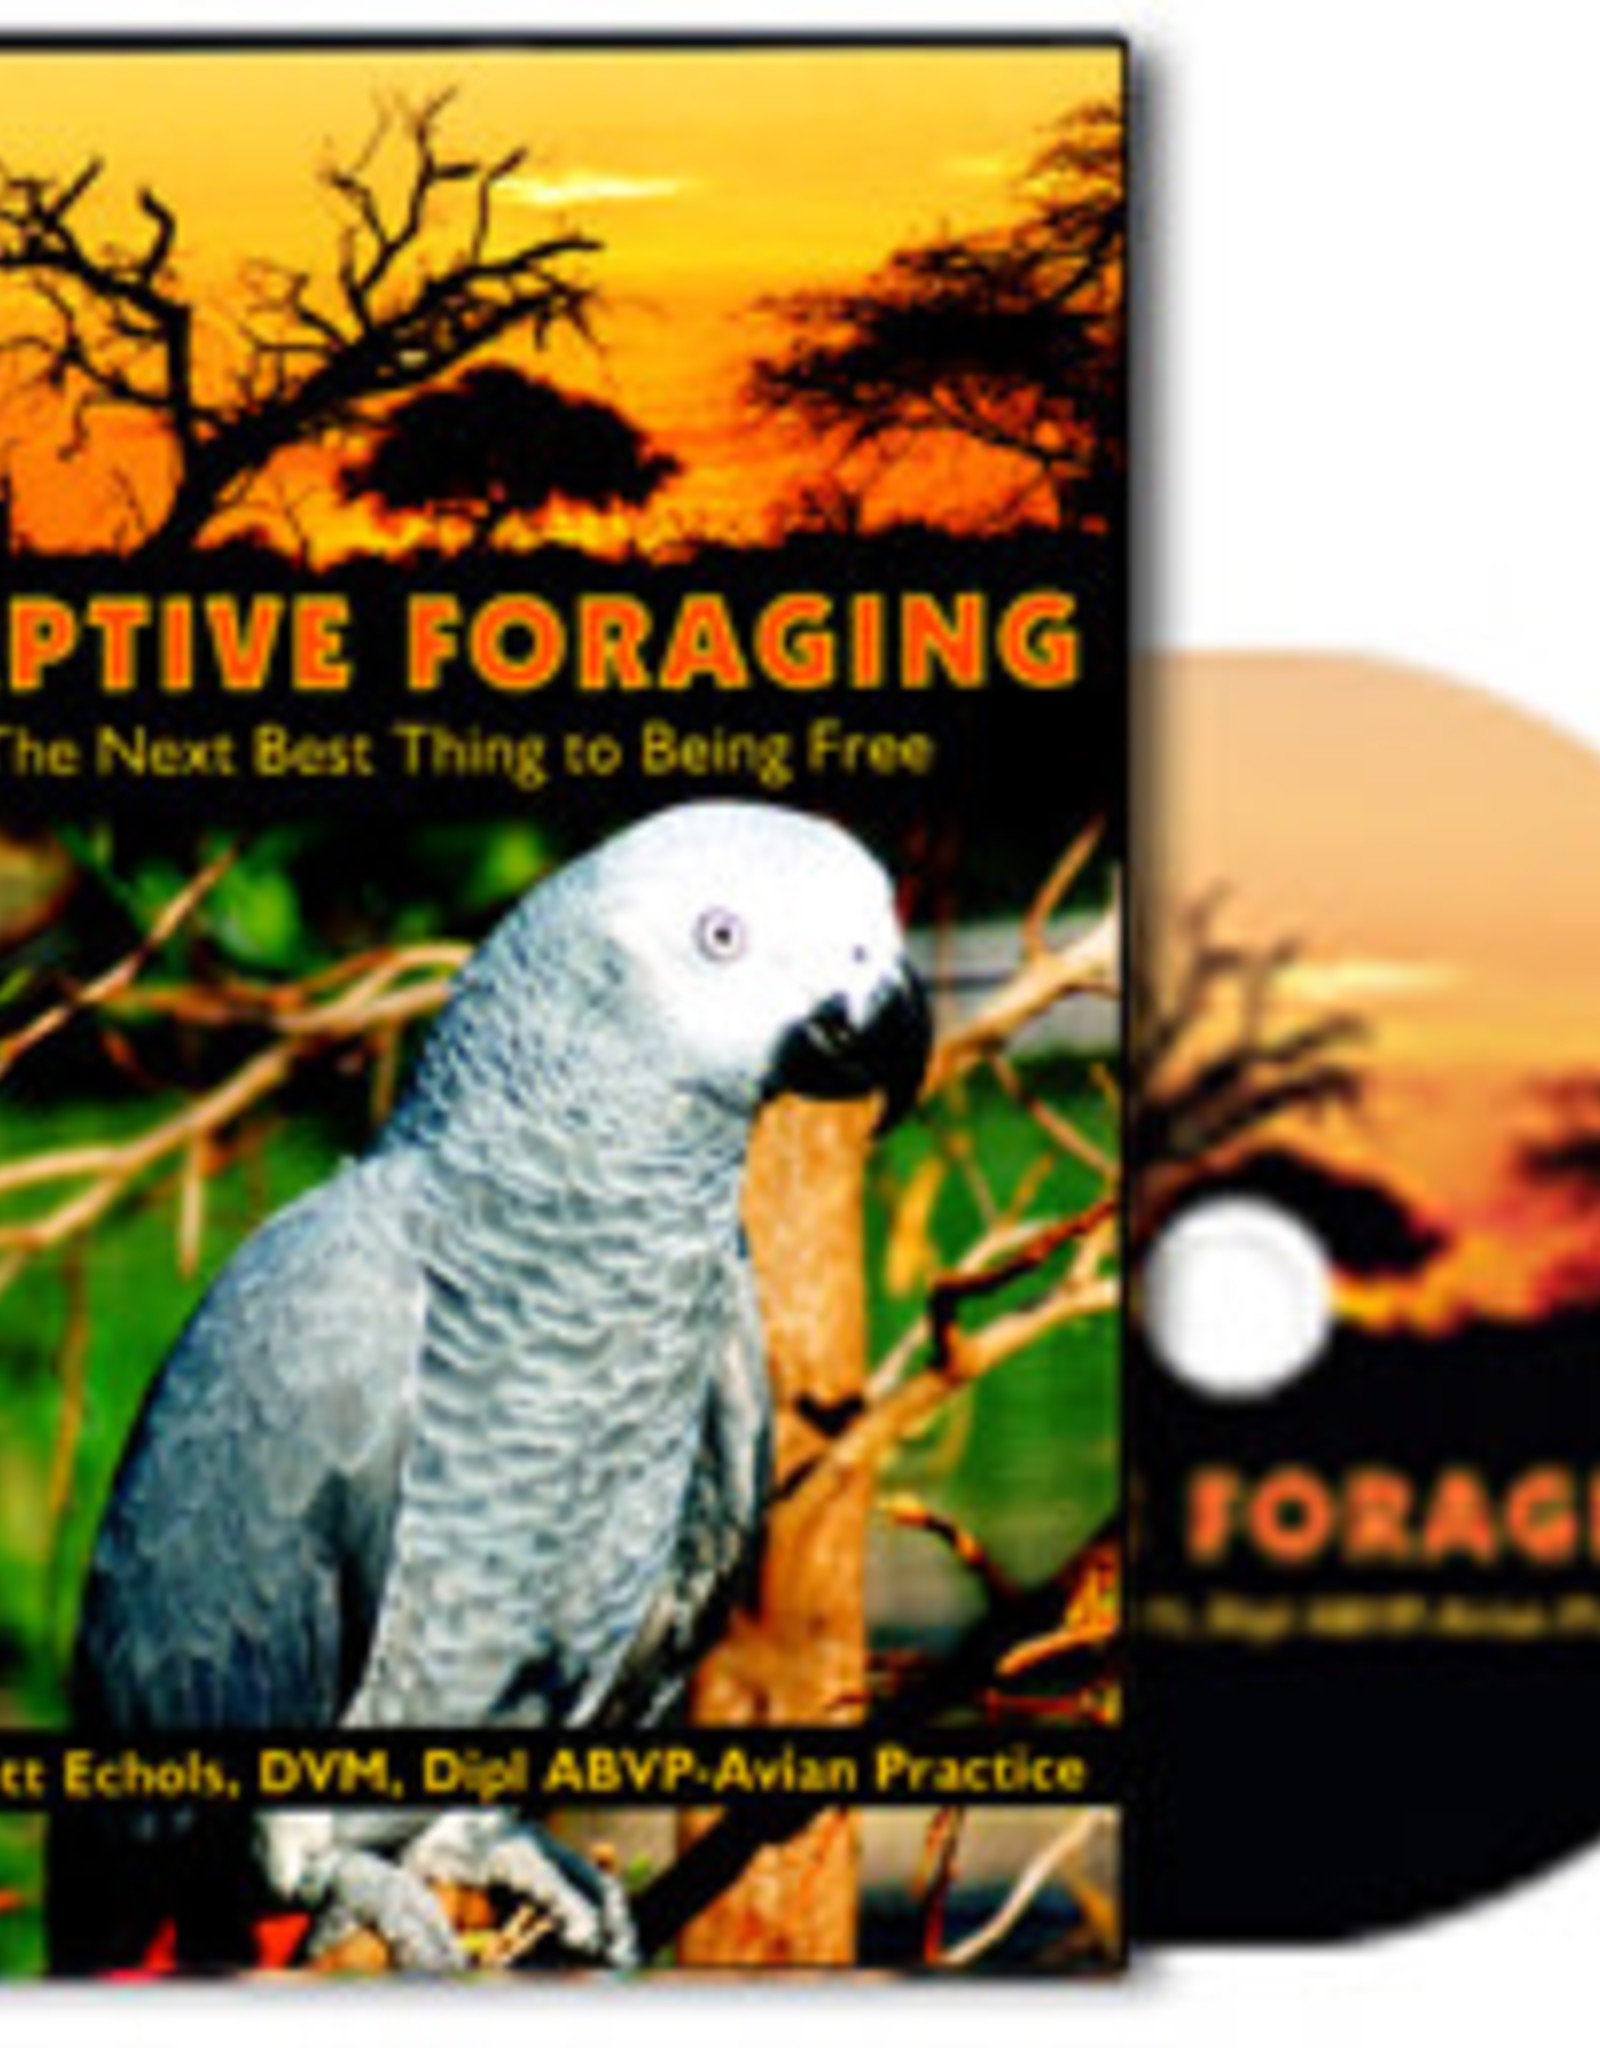 ZEN 00001 - CAPTIVE FORAGING DVD By M. Scott Echols, DVM